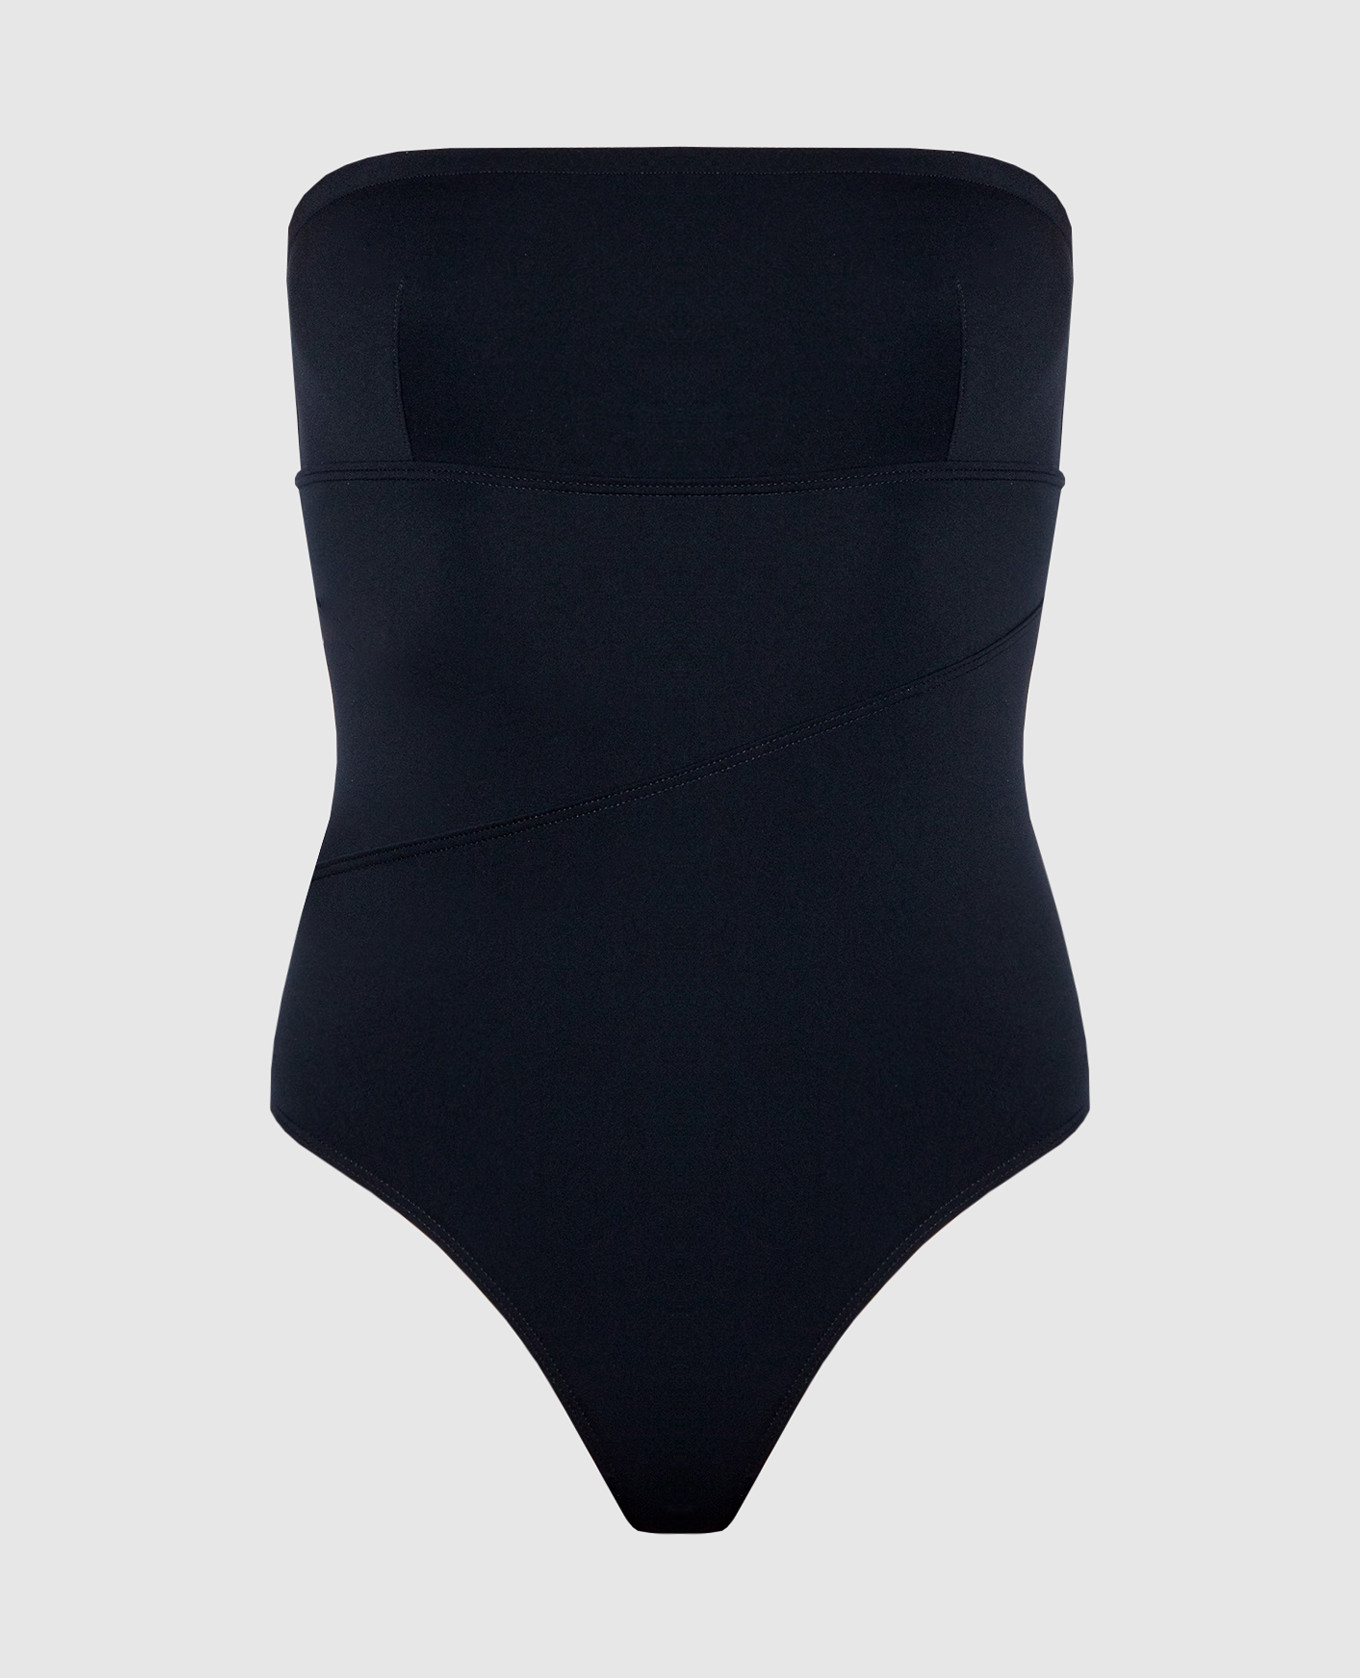 Black swimsuit